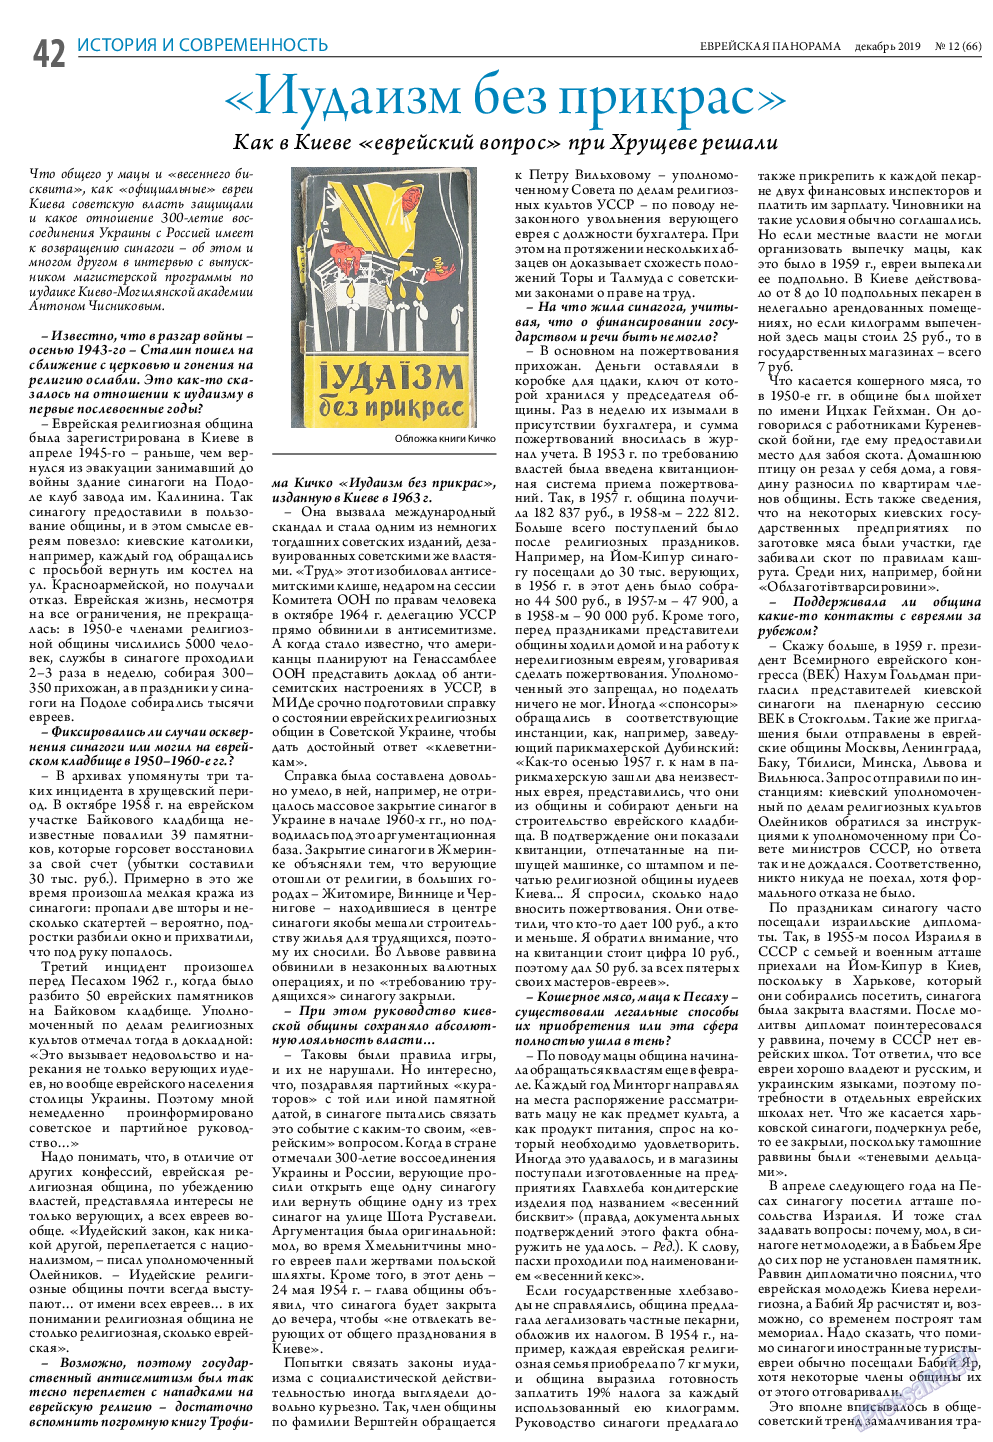 Еврейская панорама, газета. 2019 №12 стр.42